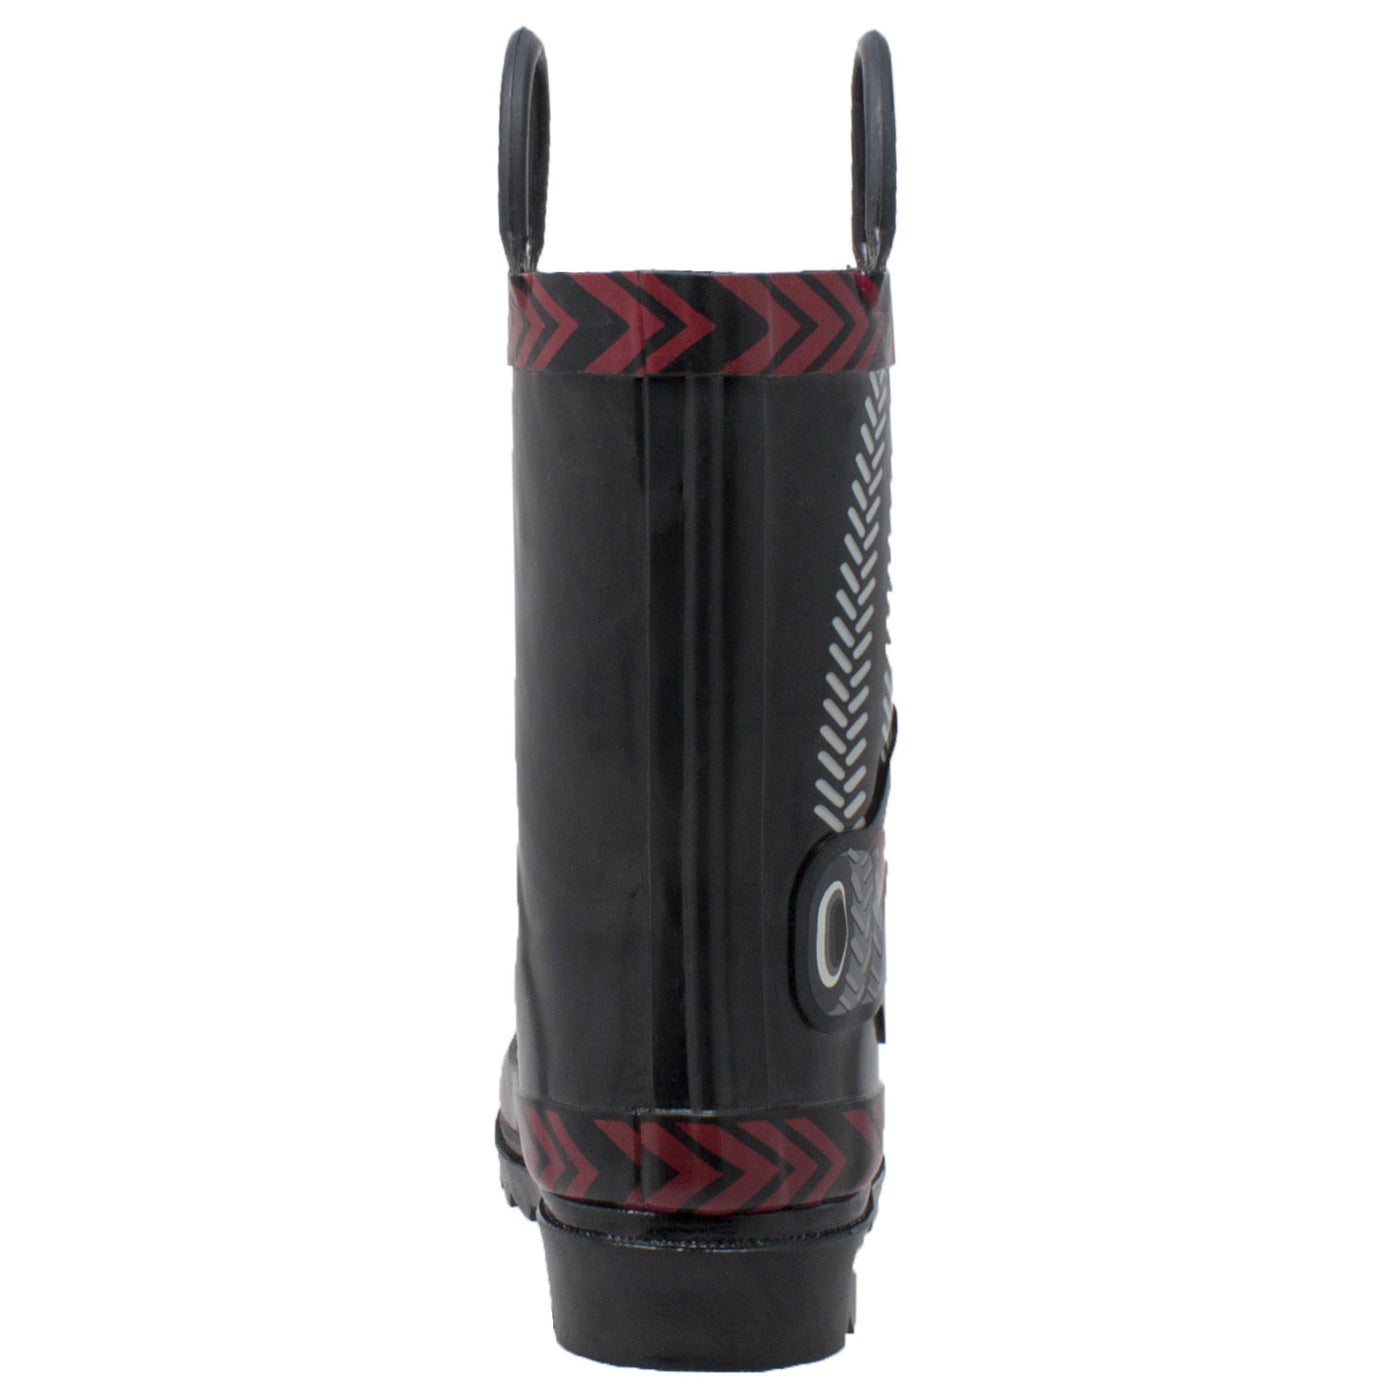 Toddler's 3D "Big Red" Rubber Boot Black - CI-5003 - Shop Genuine Leather men & women's boots online | AdTecFootWear